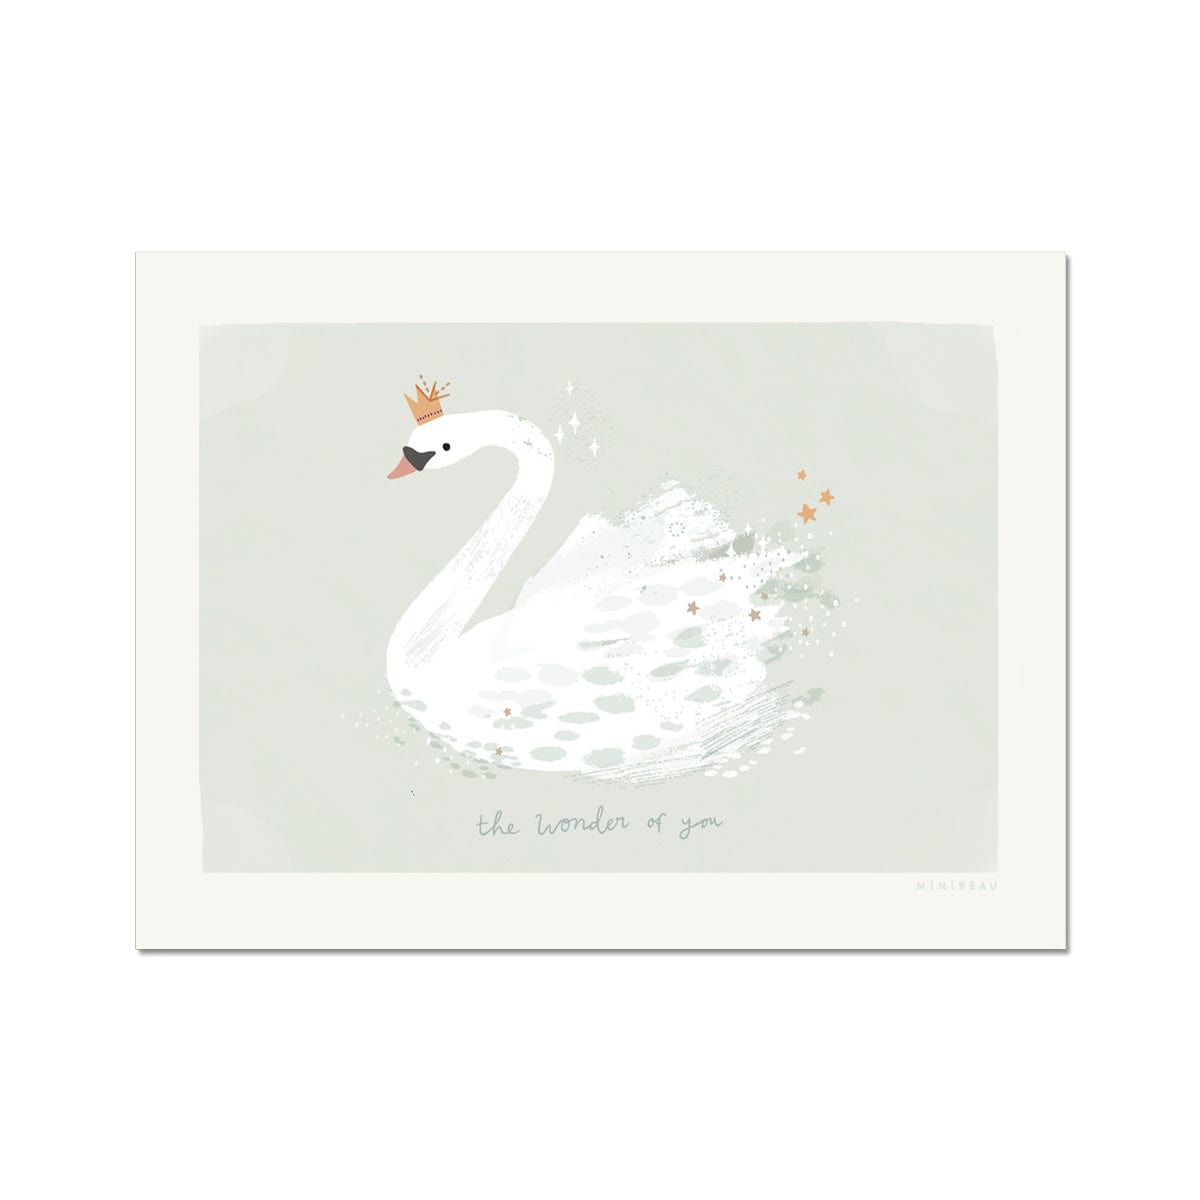 textured swan illustration on sage green ground with milk white border